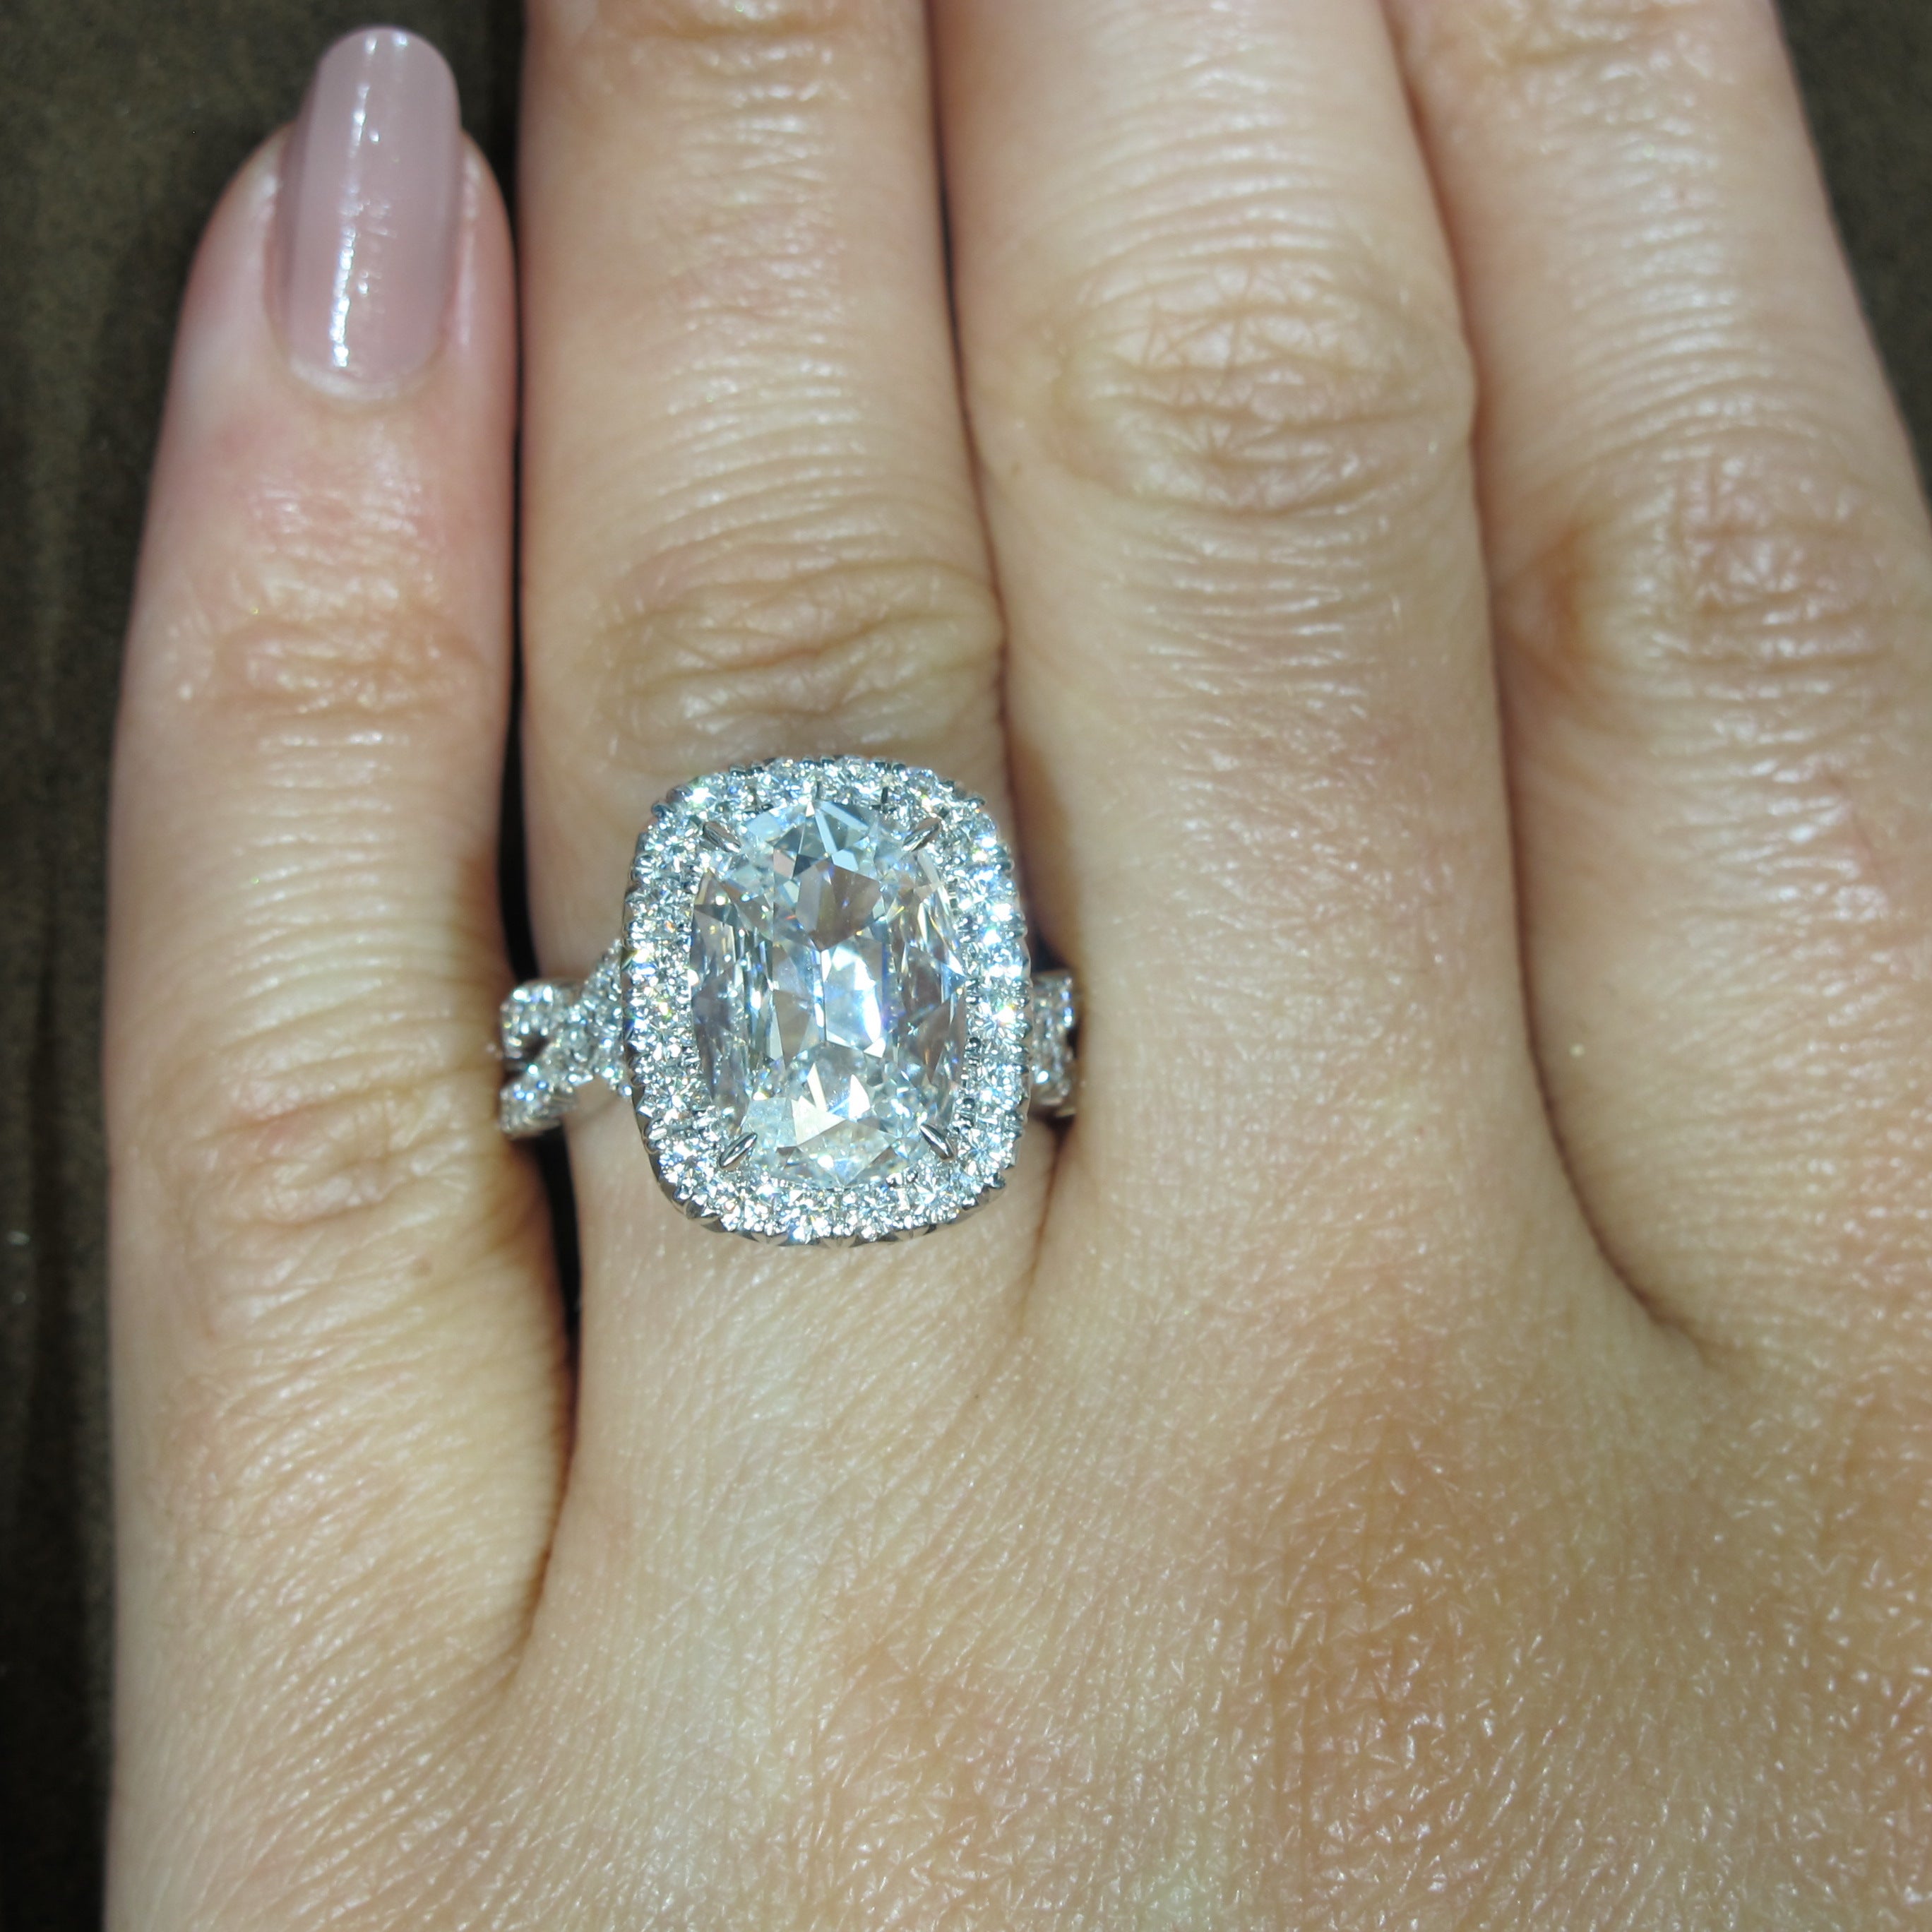 Henri Daussi Designer Signed GIA Certified Totaling 4.59cts Diamond  Engagement Anniversary Ring